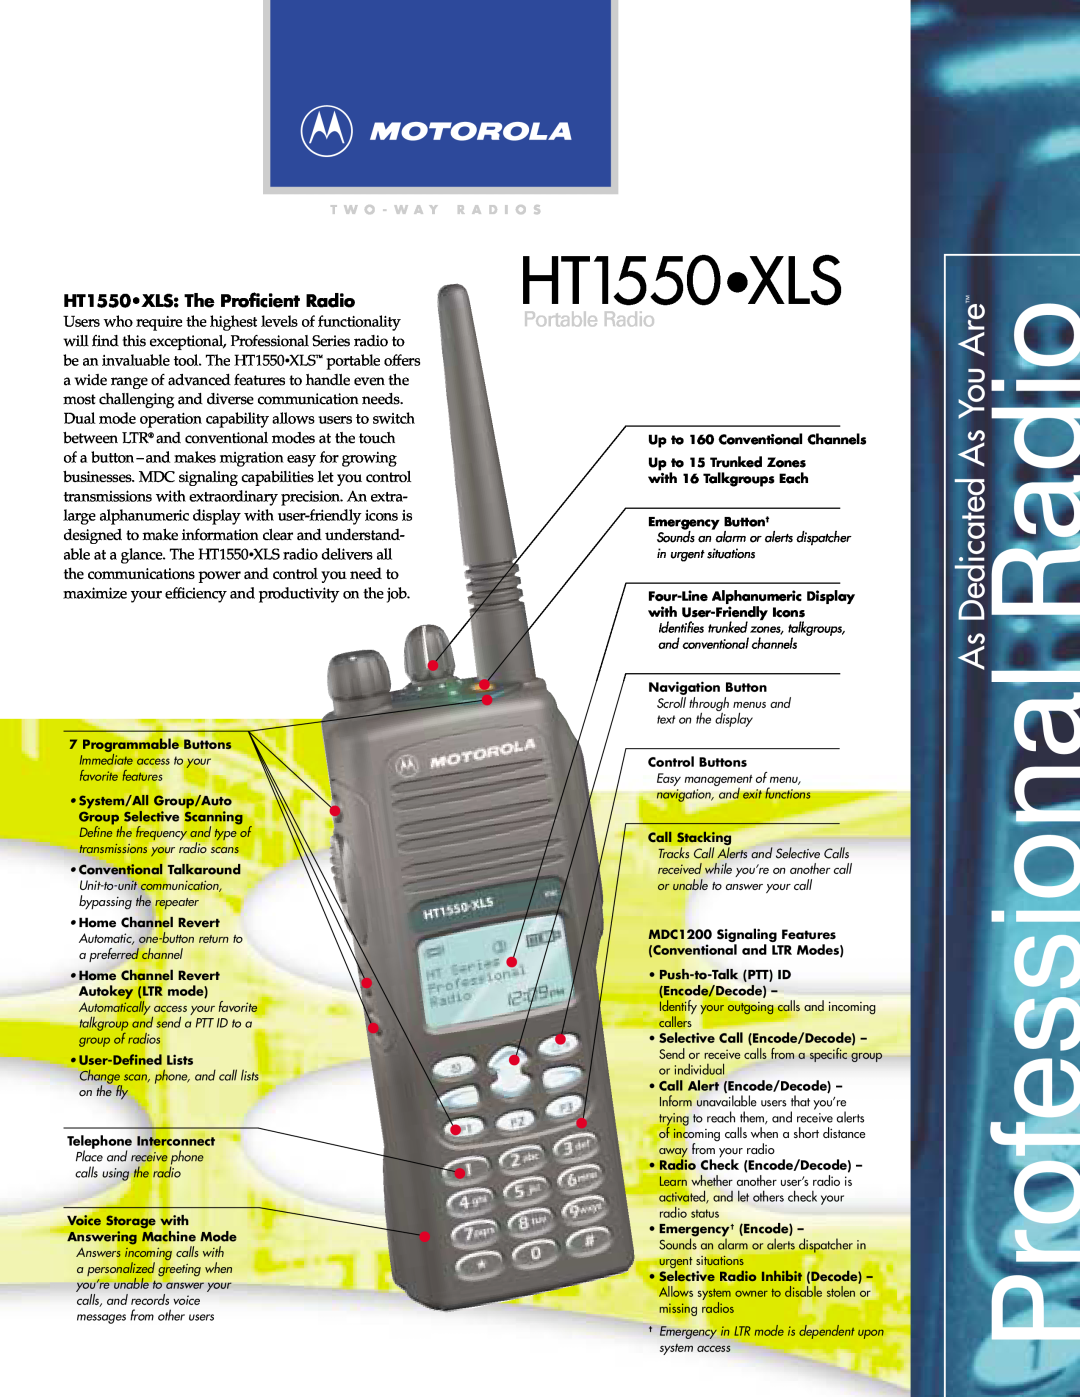 Motorola HT1550XLS manual Professional Series Two-WayRadio User Guide, Séries professionnelles, HT1550 XLS 